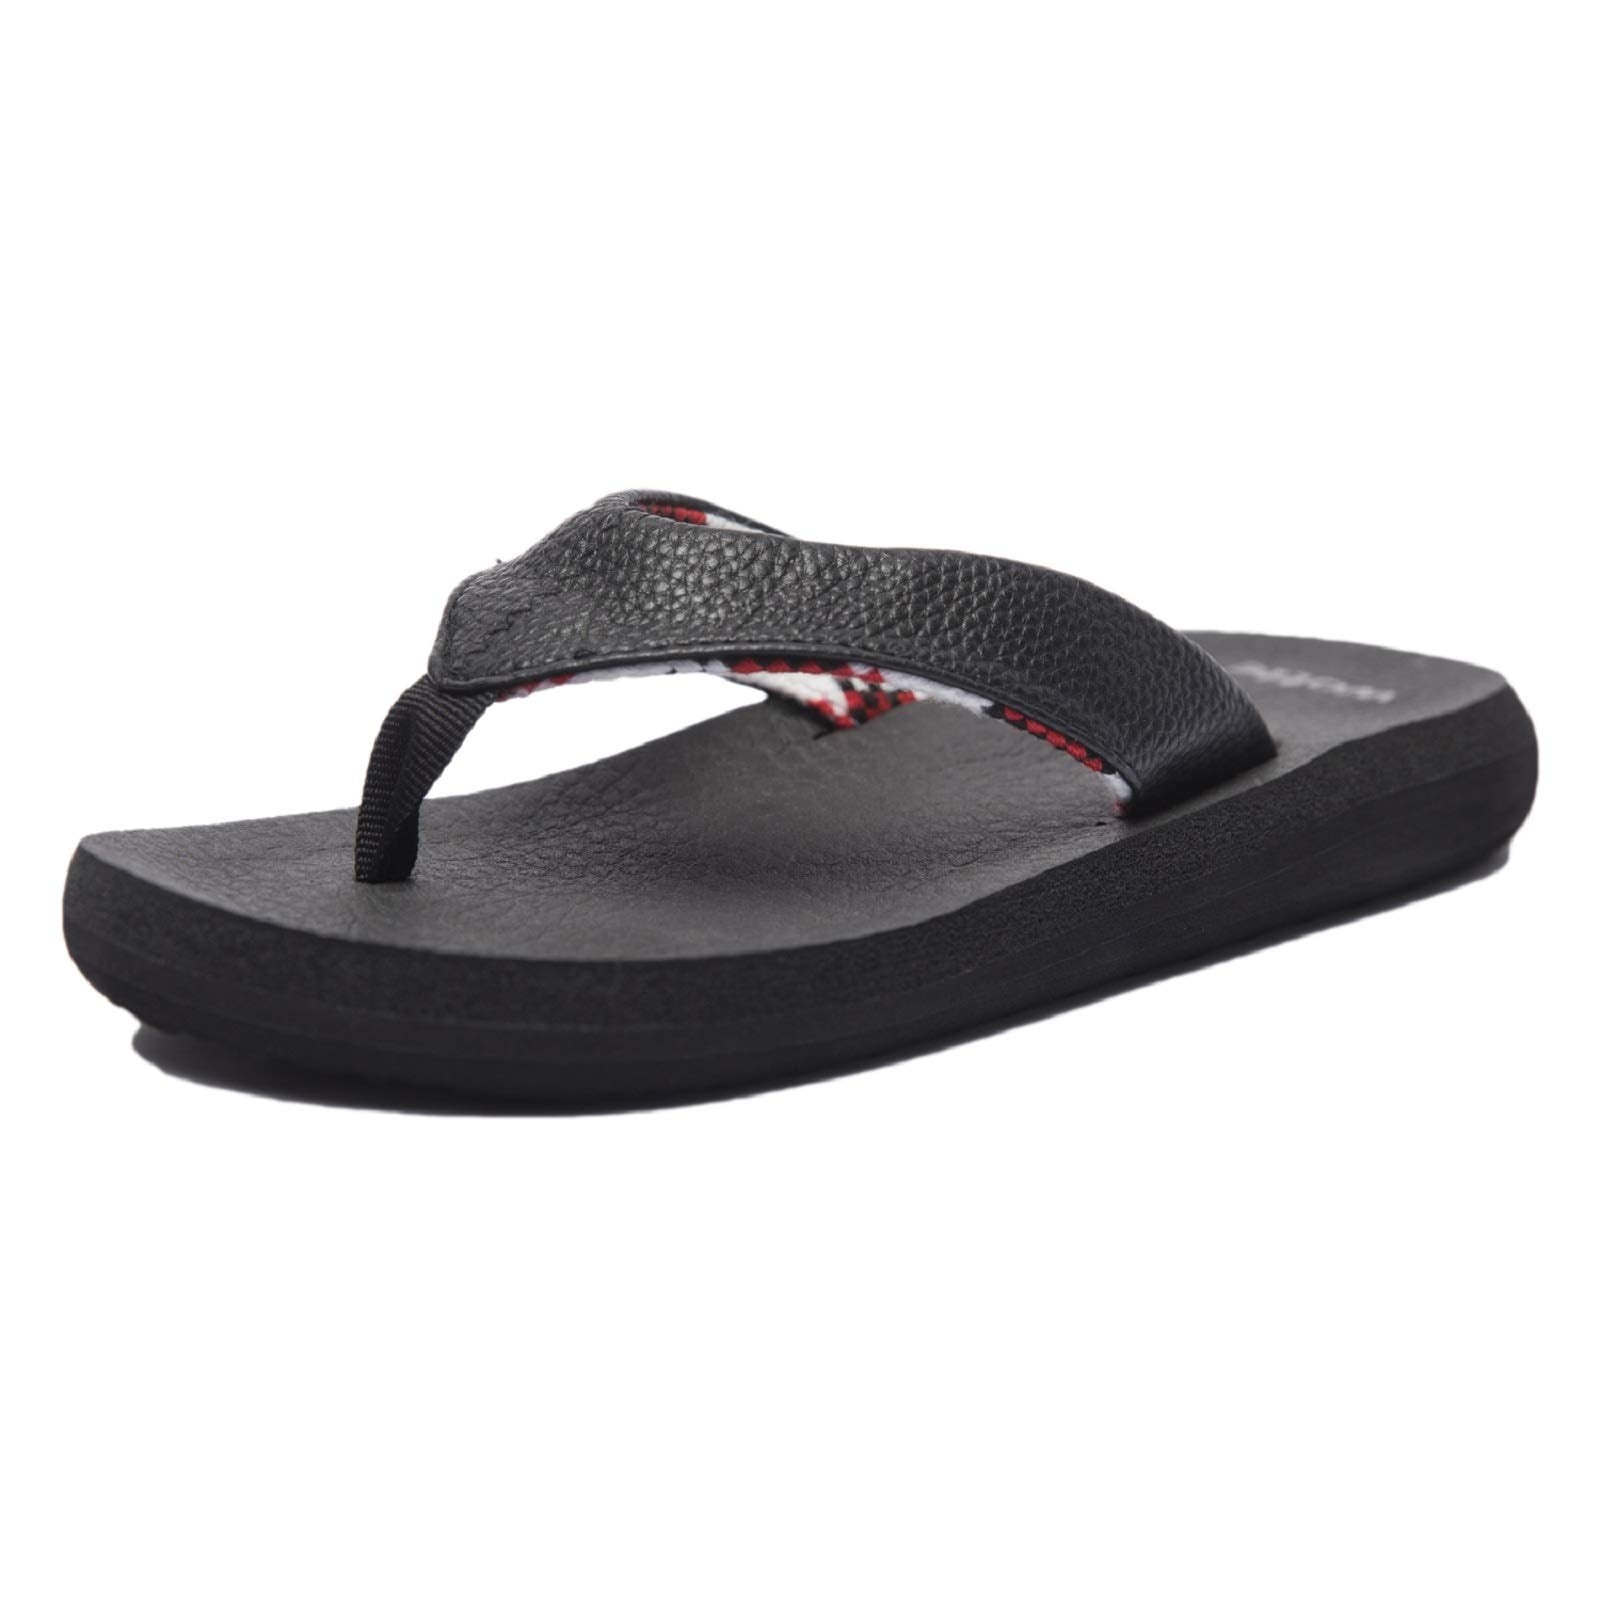 WOTTE Women's Yoga Mat Flip Flops Soft Cushion Thong Sandals Size 5.5, Black